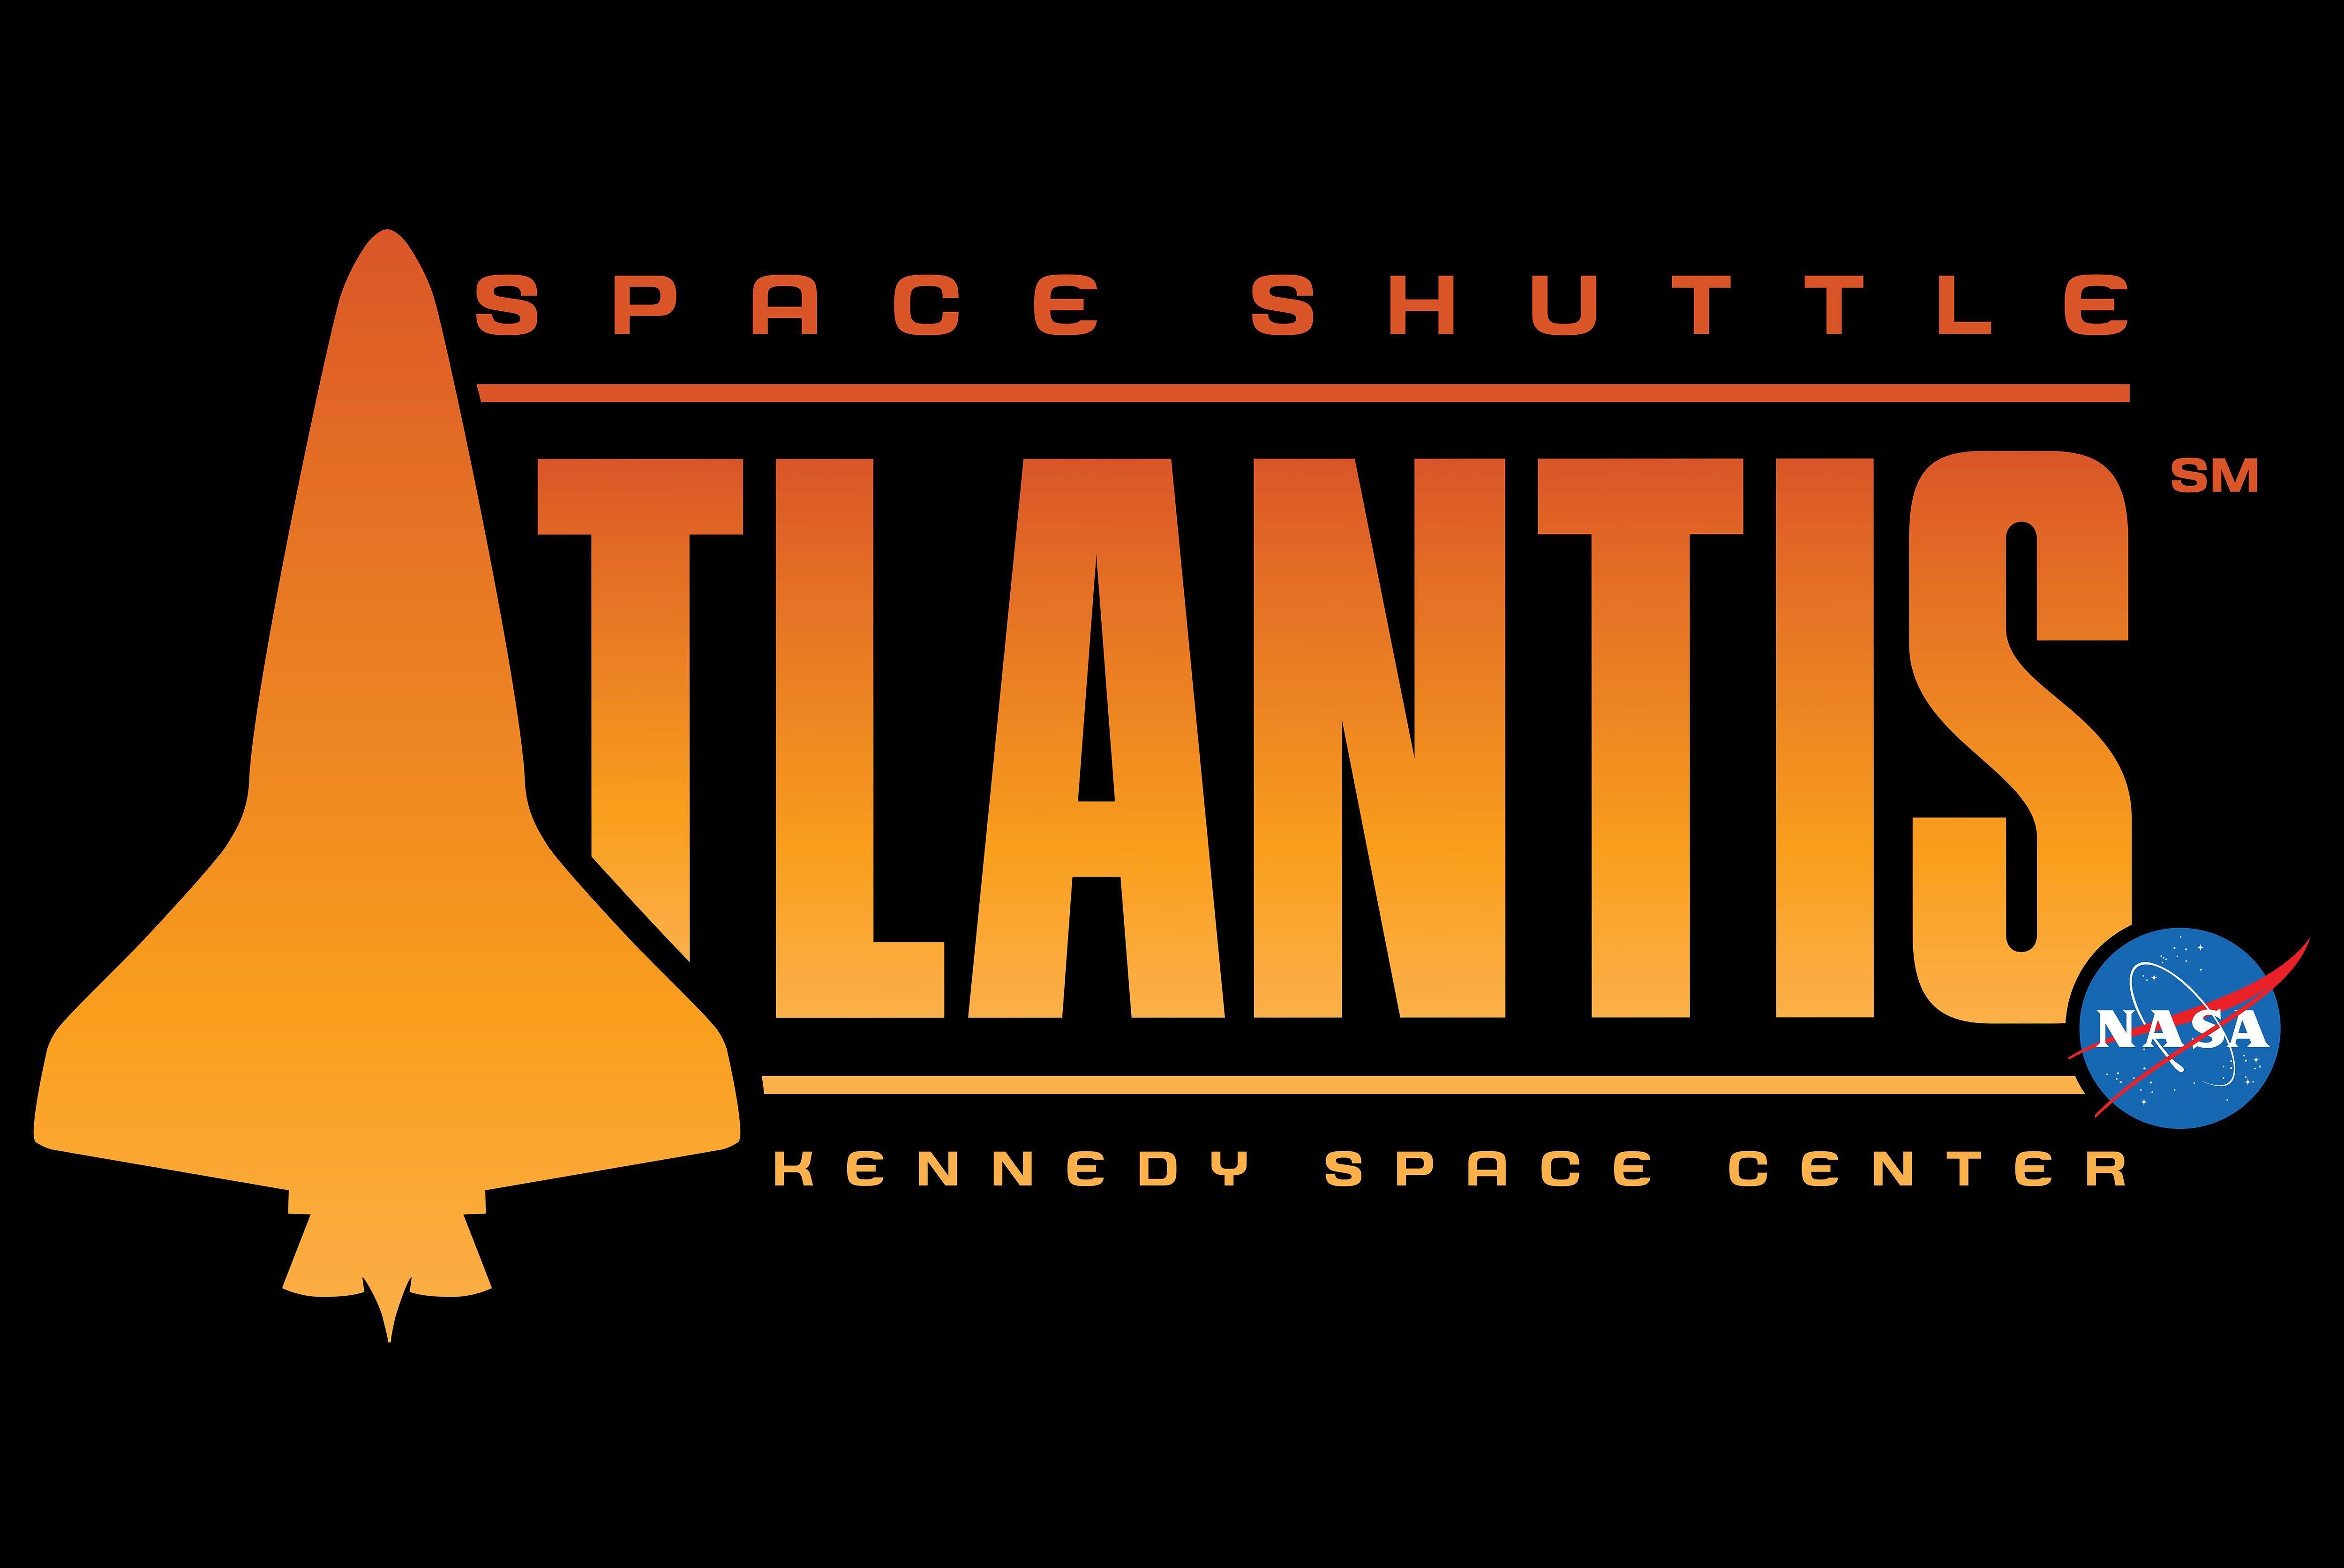 Shuttle Launch NASA Logo - Atlantis' New Home to Open June 29